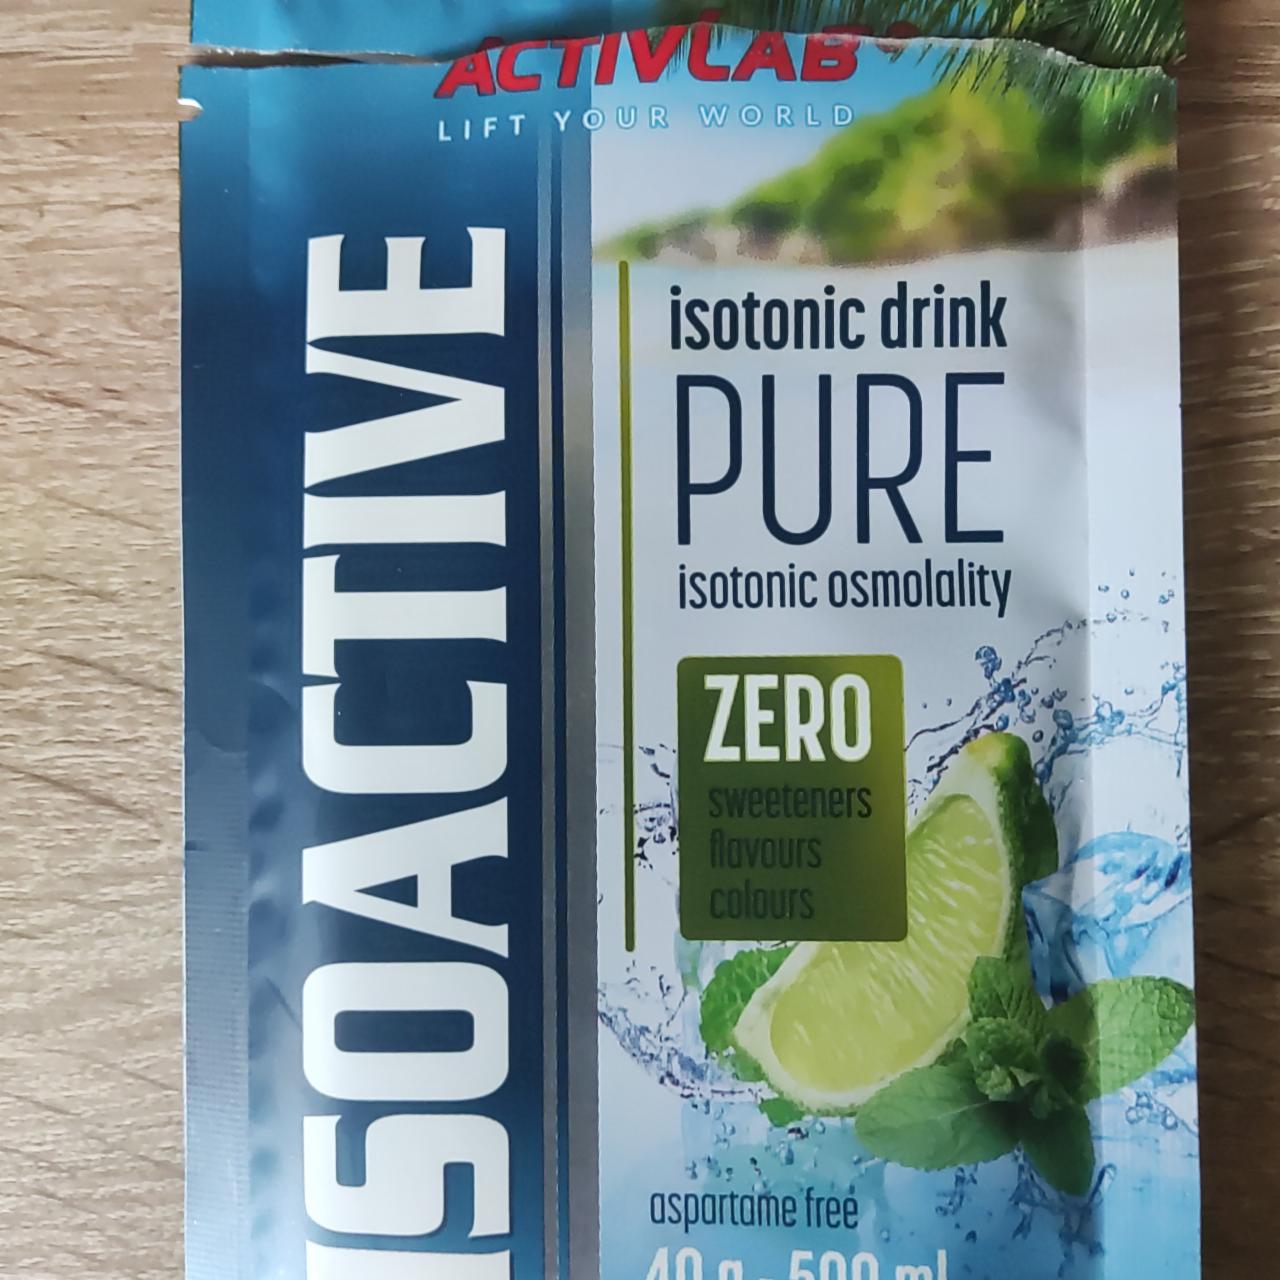 Fotografie - Isoactive isotonic drink Pure Activlab